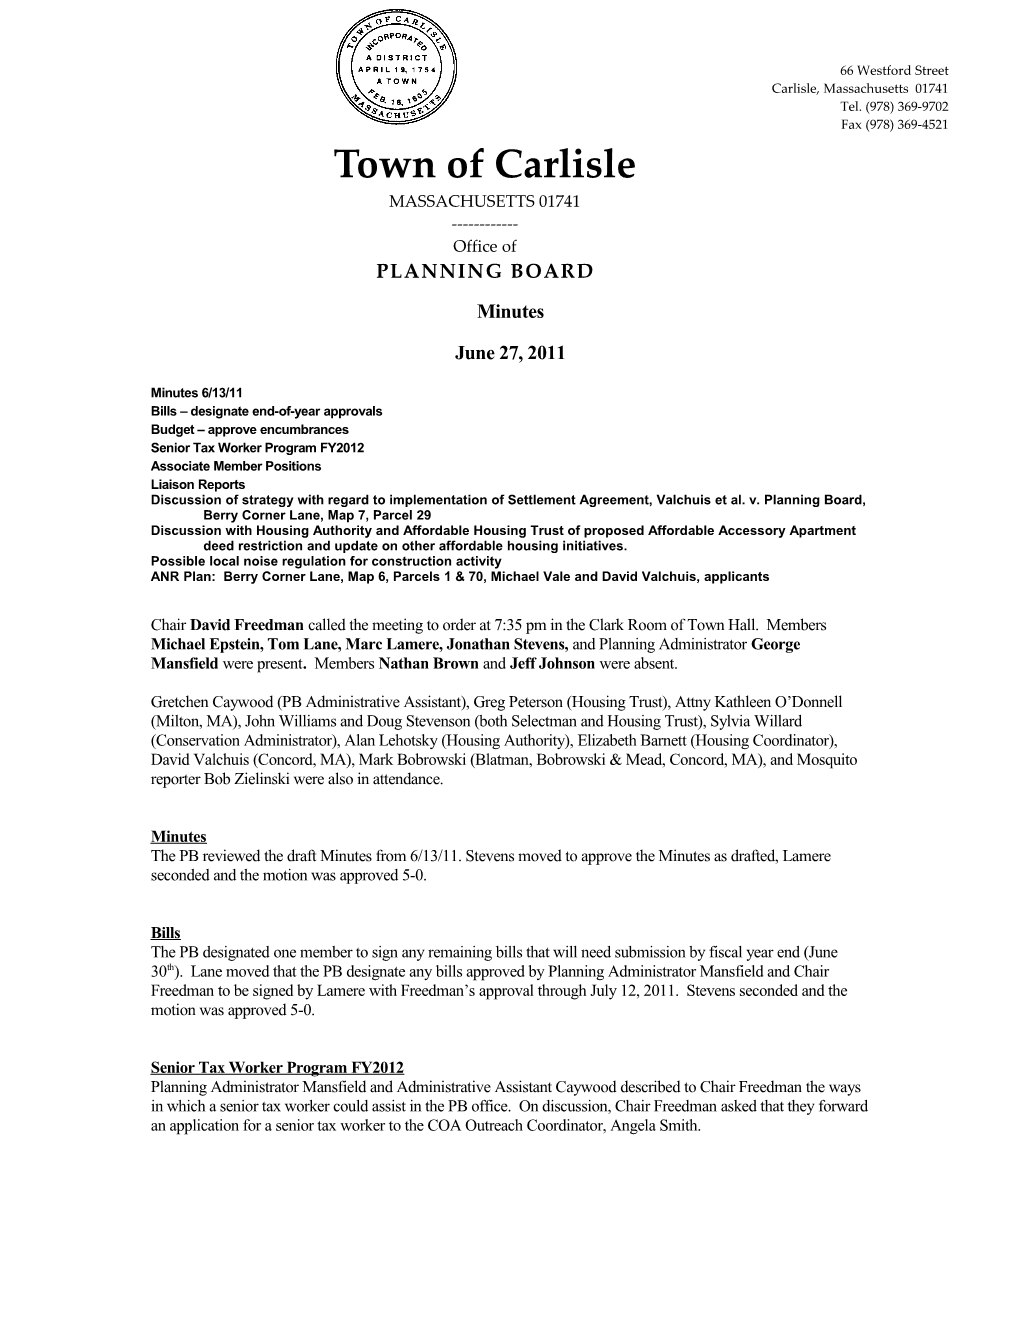 Town of Carlisle